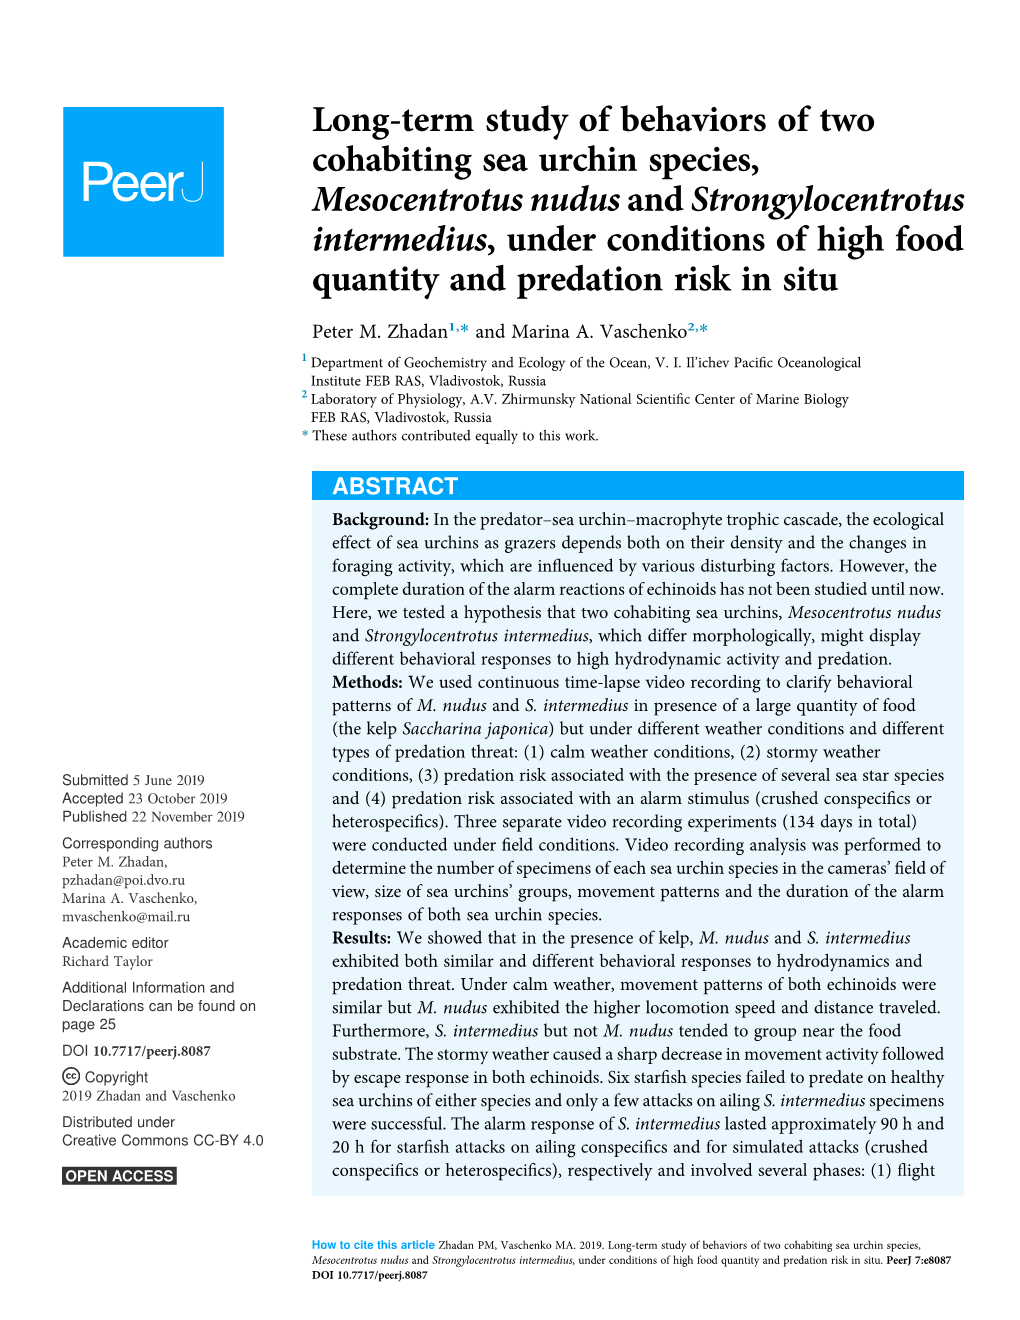 Long-Term Study of Behaviors of Two Cohabiting Sea Urchin Species, Mesocentrotus Nudus and Strongylocentrotus Intermedius, Under